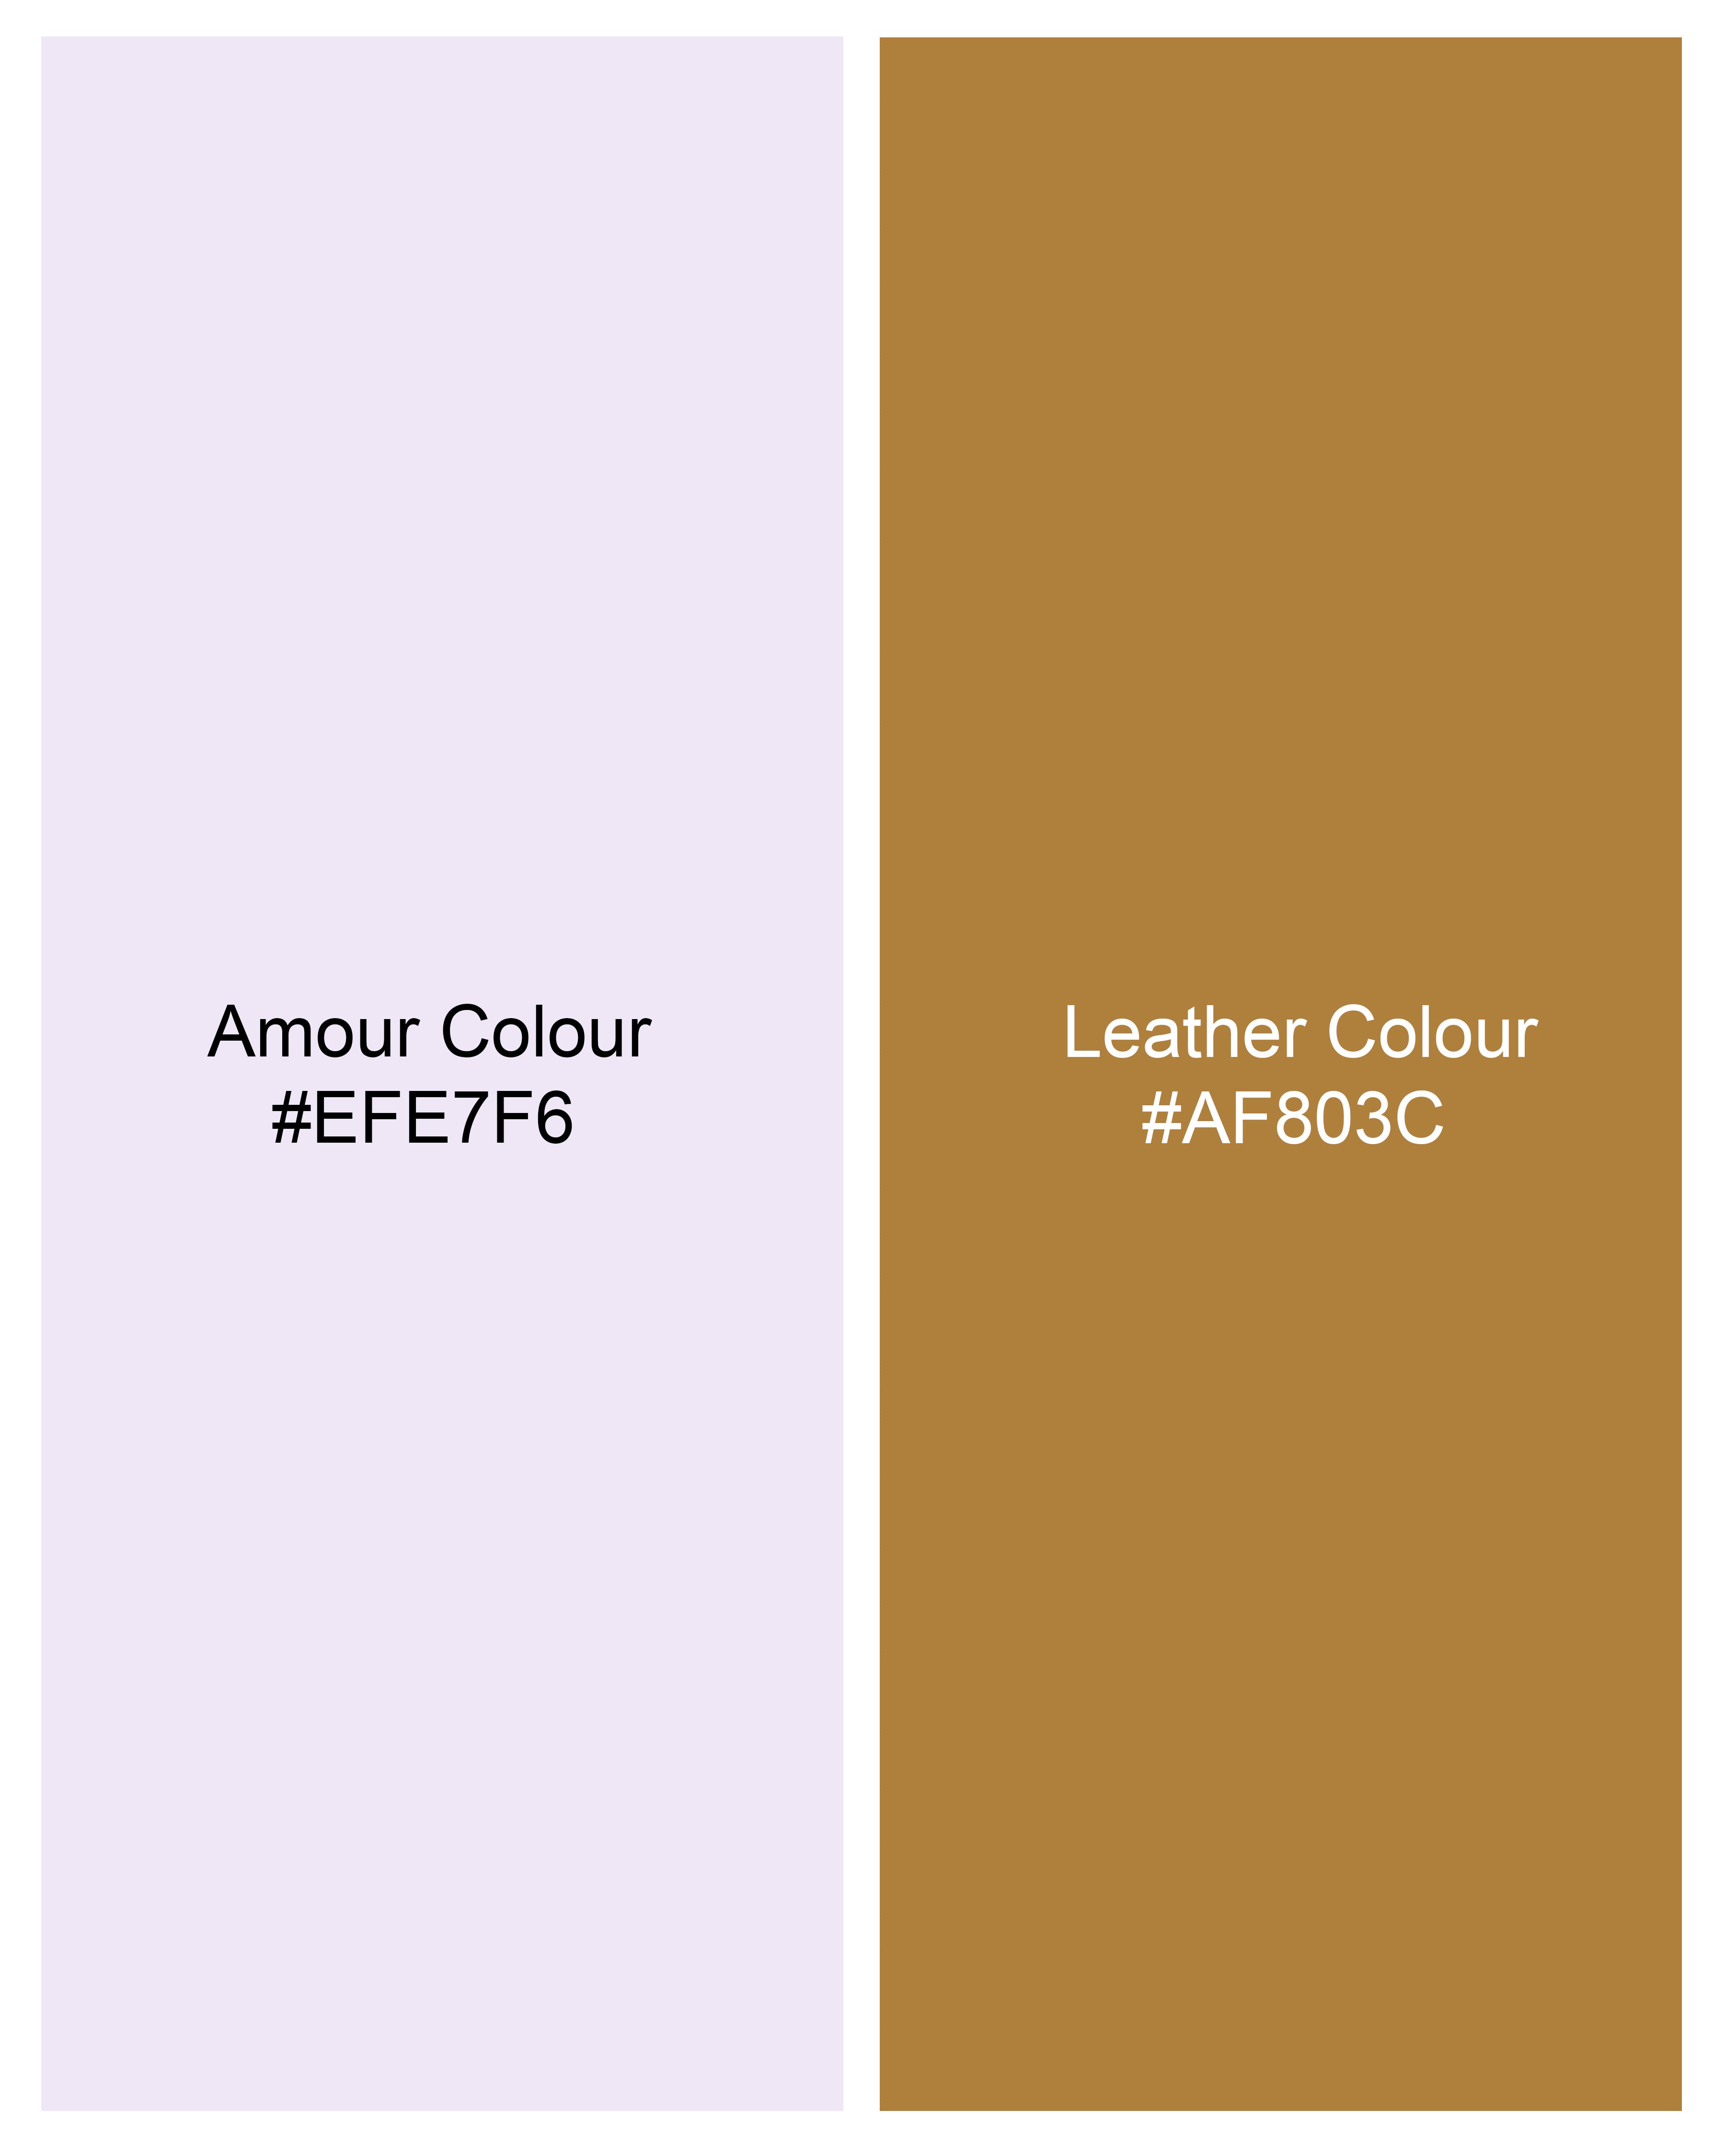 Amour purple and Leather Brown Checkered Joker Printed Premium Cotton Designer Shirt 7755-RPRT-008-38, 7755-RPRT-008-H-38, 7755-RPRT-008-39, 7755-RPRT-008-H-39, 7755-RPRT-008-40, 7755-RPRT-008-H-40, 7755-RPRT-008-42, 7755-RPRT-008-H-42, 7755-RPRT-008-44, 7755-RPRT-008-H-44, 7755-RPRT-008-46, 7755-RPRT-008-H-46, 7755-RPRT-008-48, 7755-RPRT-008-H-48, 7755-RPRT-008-50, 7755-RPRT-008-H-50, 7755-RPRT-008-52, 7755-RPRT-008-H-52